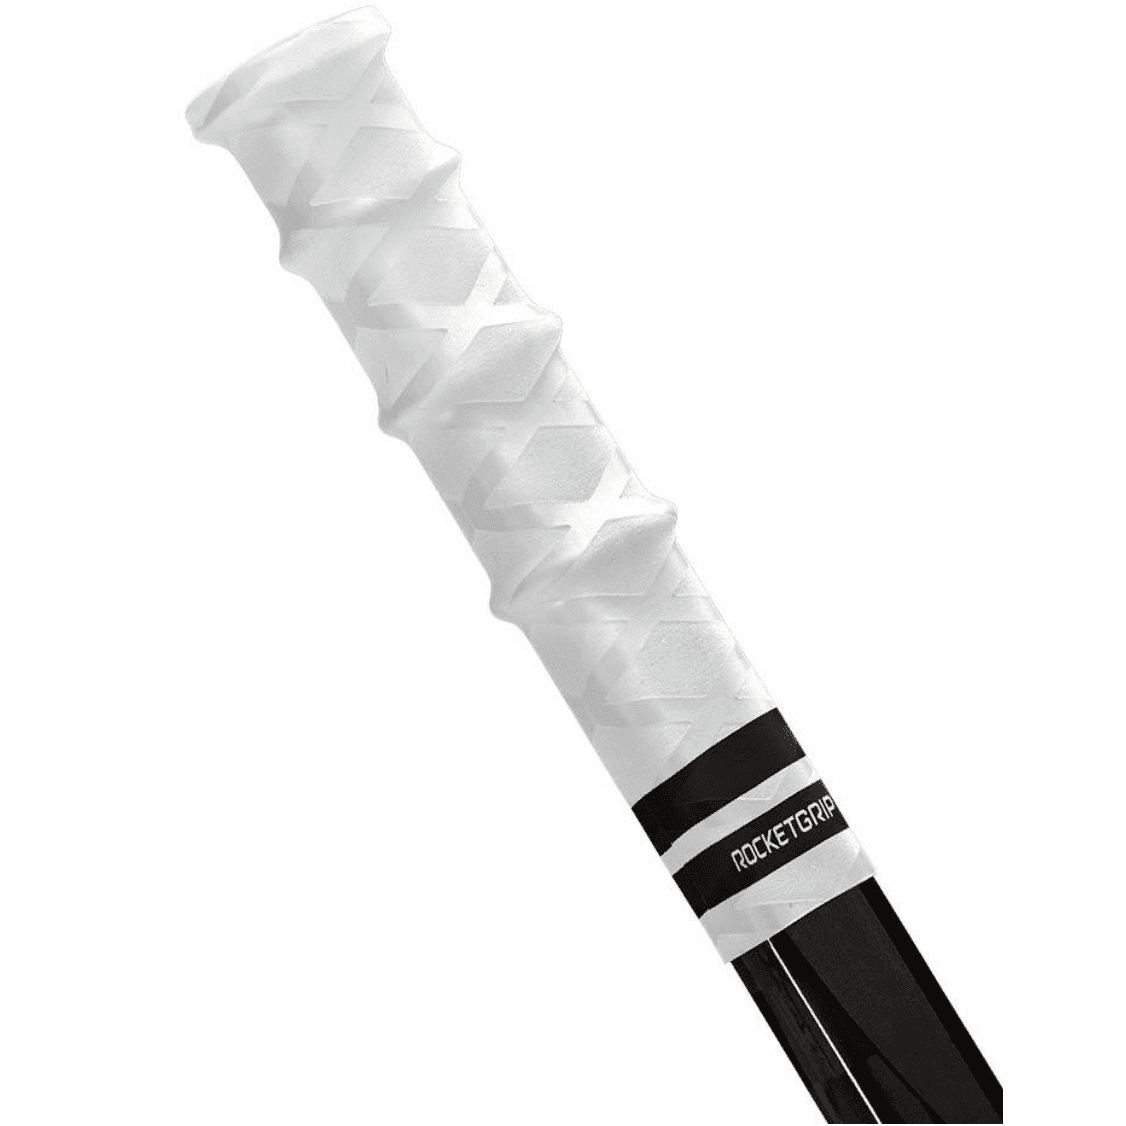 RocketGrip Rubber Hockey Grip - White / Black